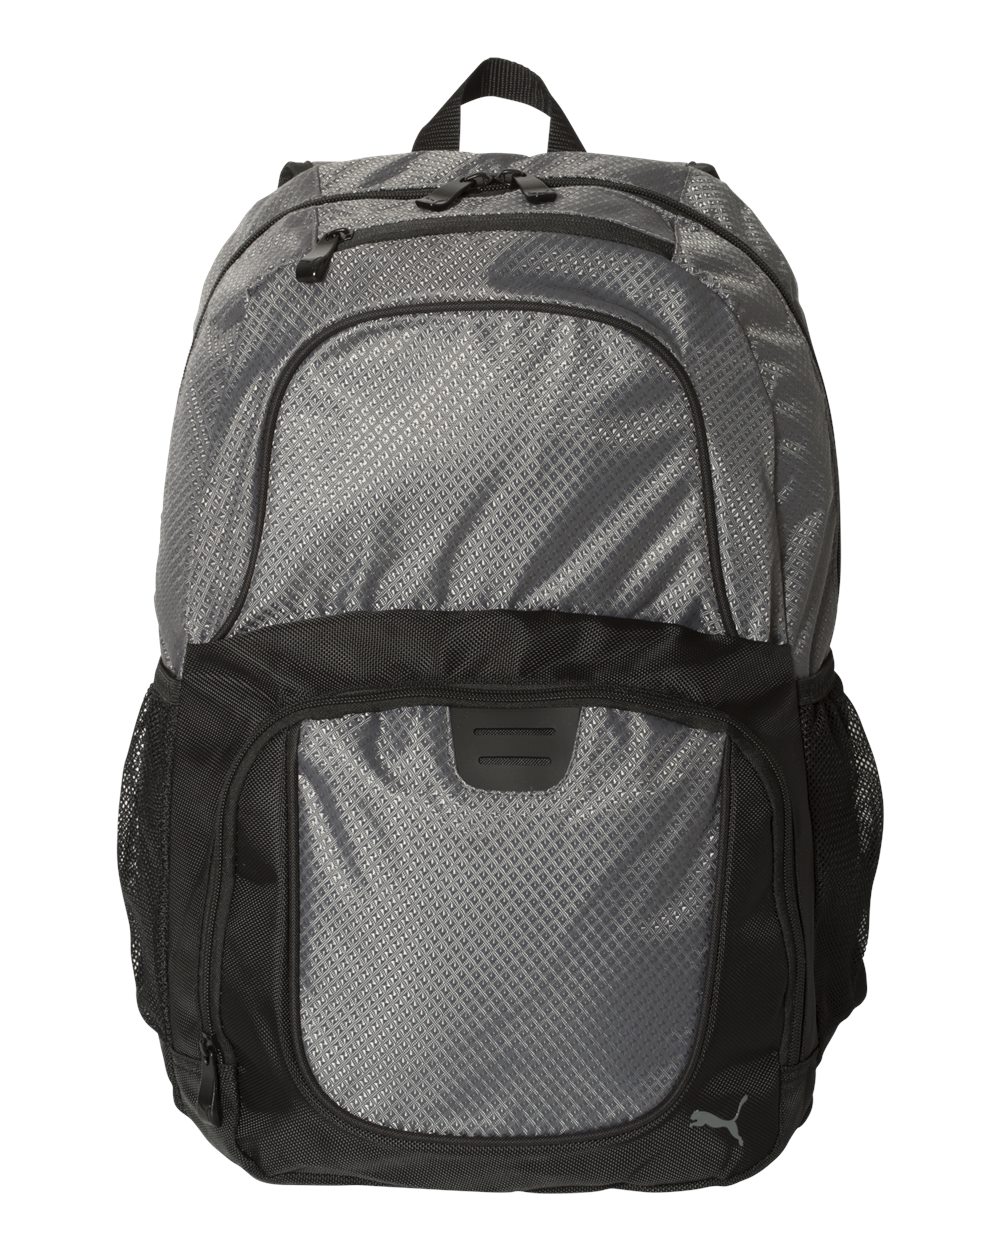 Puma - 25L Backpack - PSC1028 - Dark Grey/ Black - Size: One Size - image 1 of 3